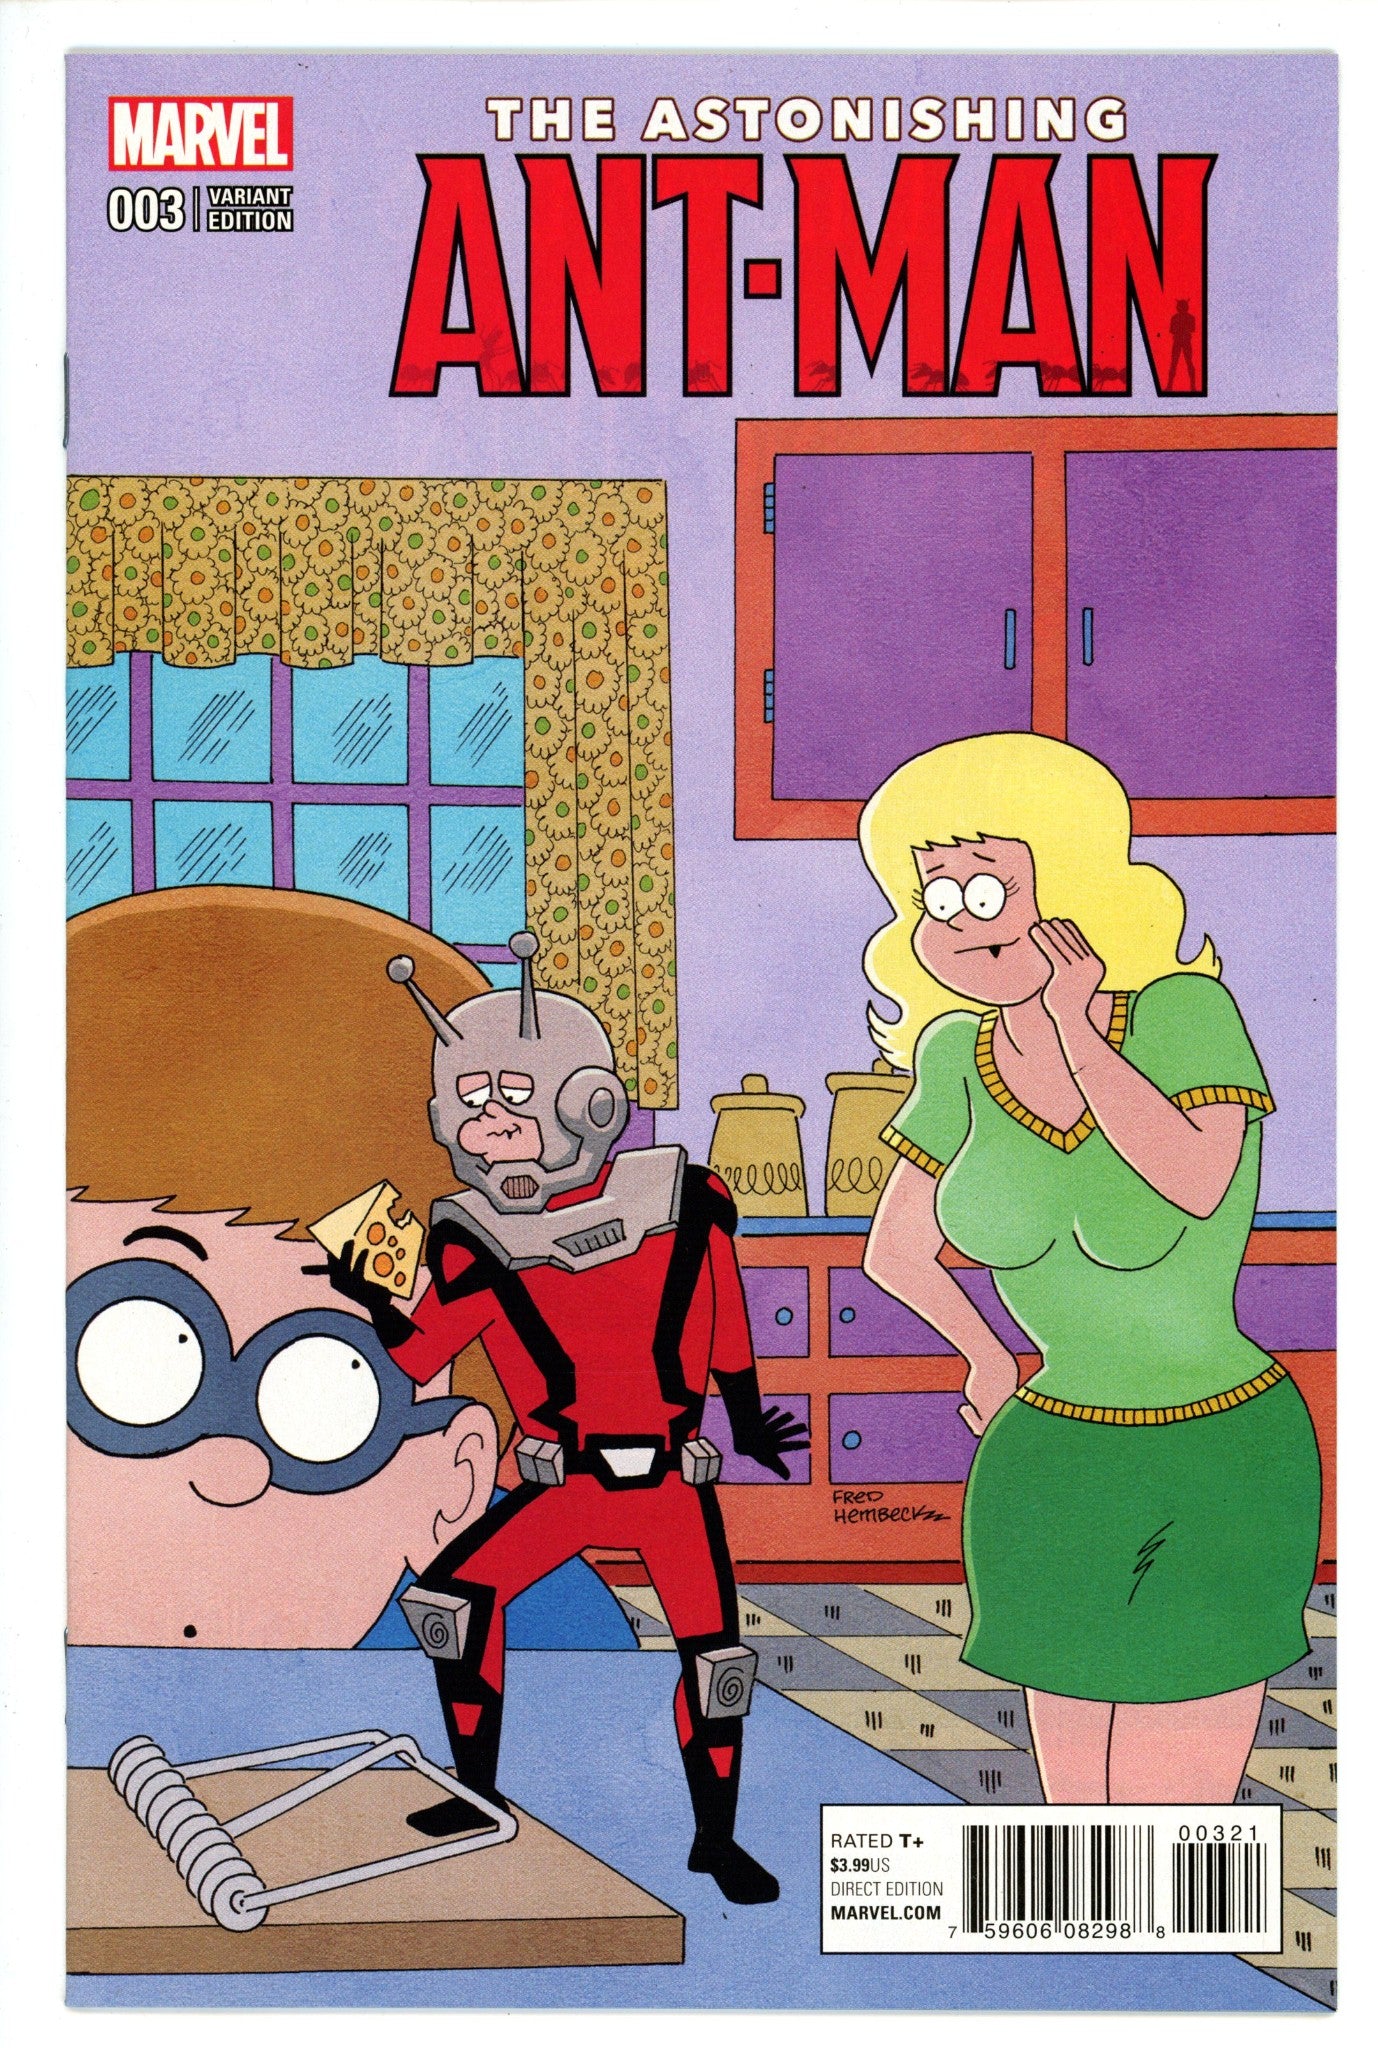 The Astonishing Ant-Man Vol 1 3 Hembeck Variant